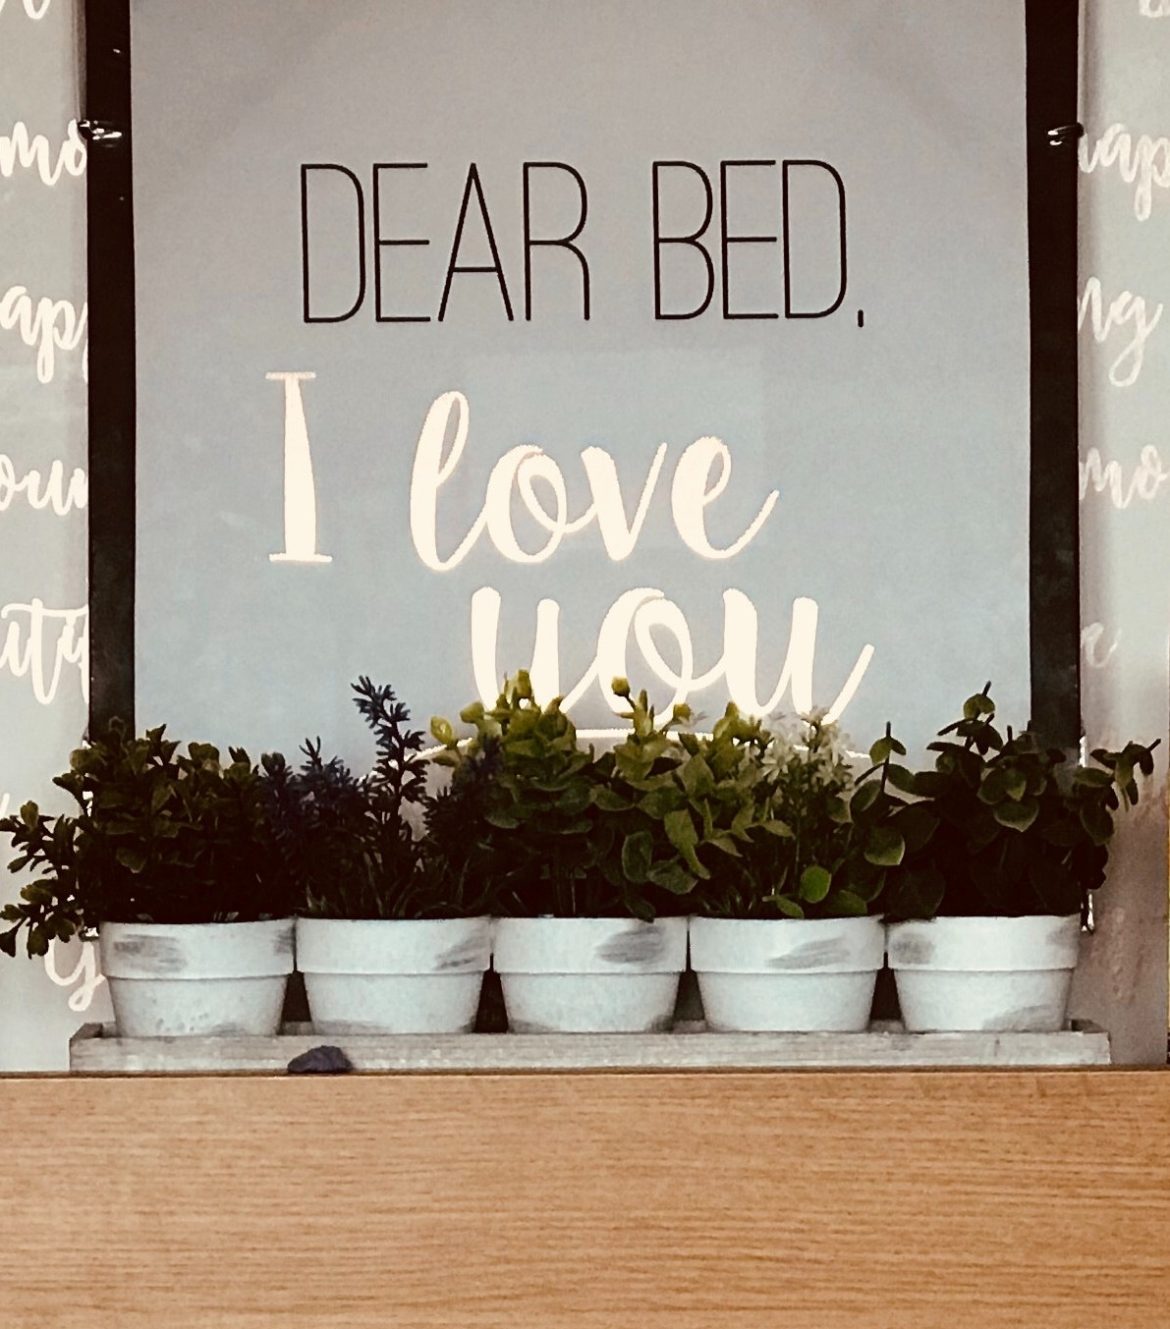 dear bed i love you